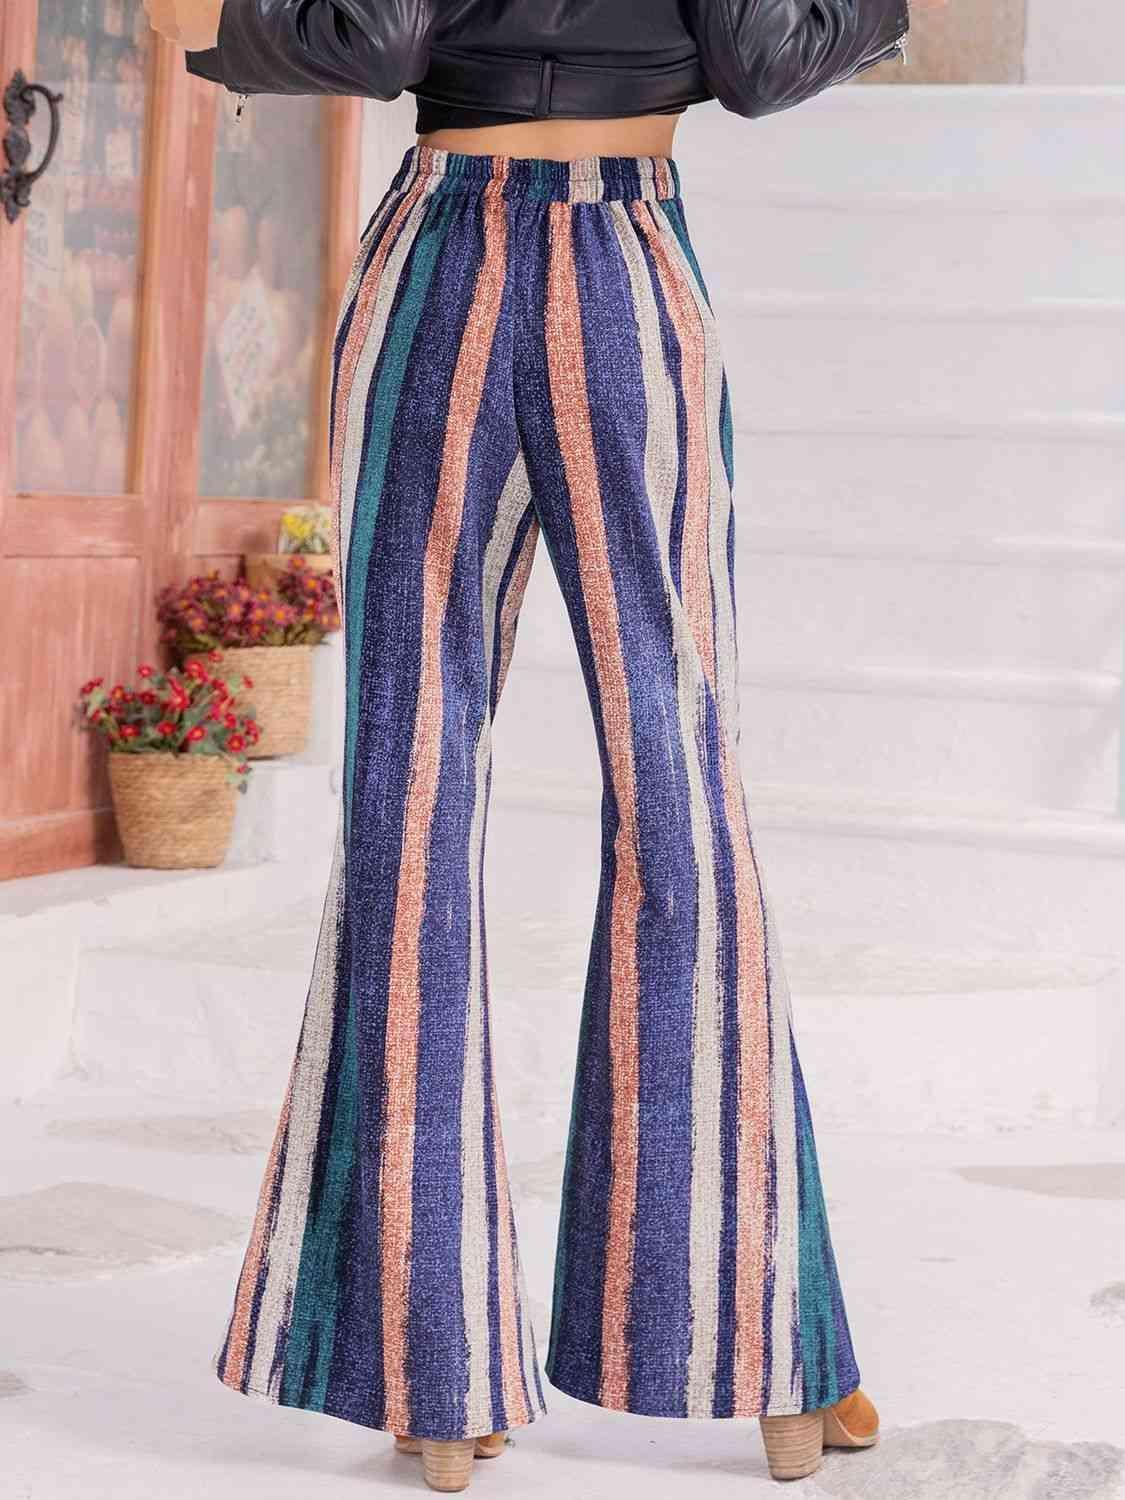 Stylish Cowgirl High Waist Striped Flare Pants - MXSTUDIO.COM